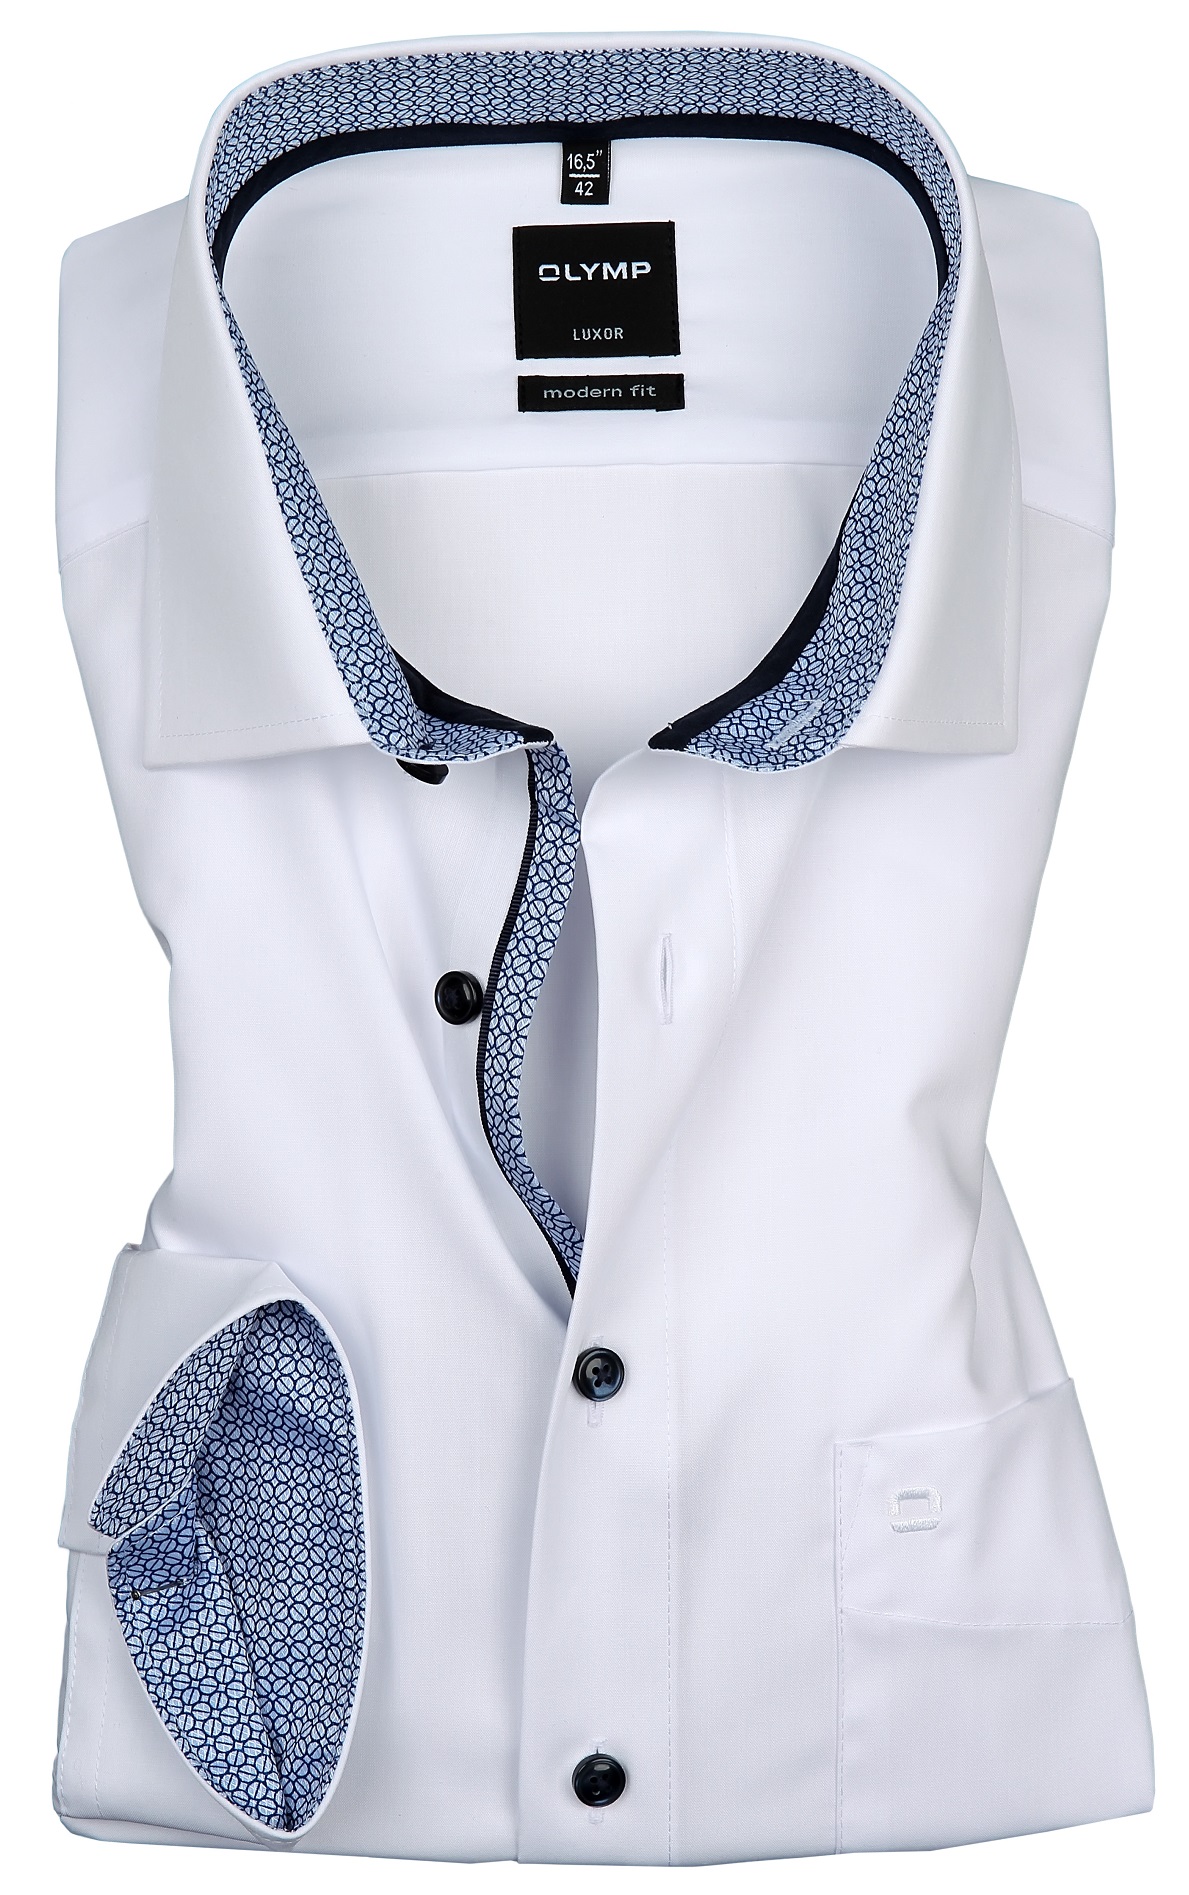 OLYMP Extra langer fit, Arm Hemden modern modisch weiß cm, Luxor 69